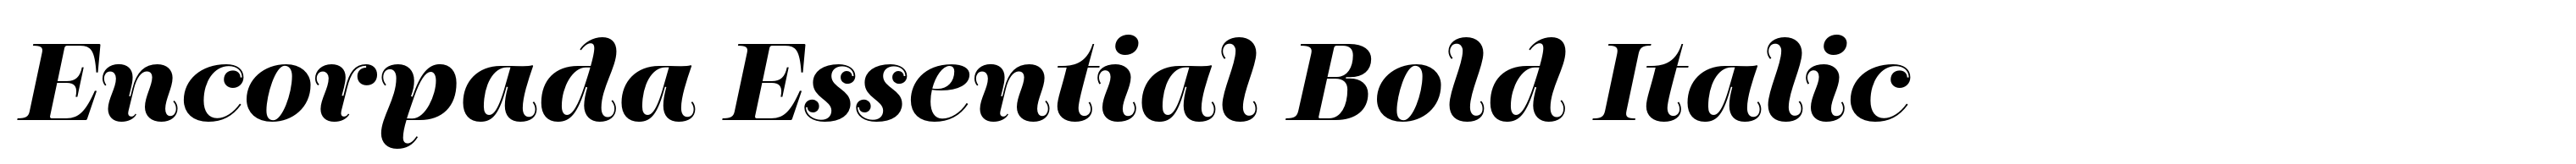 Encorpada Essential Bold Italic